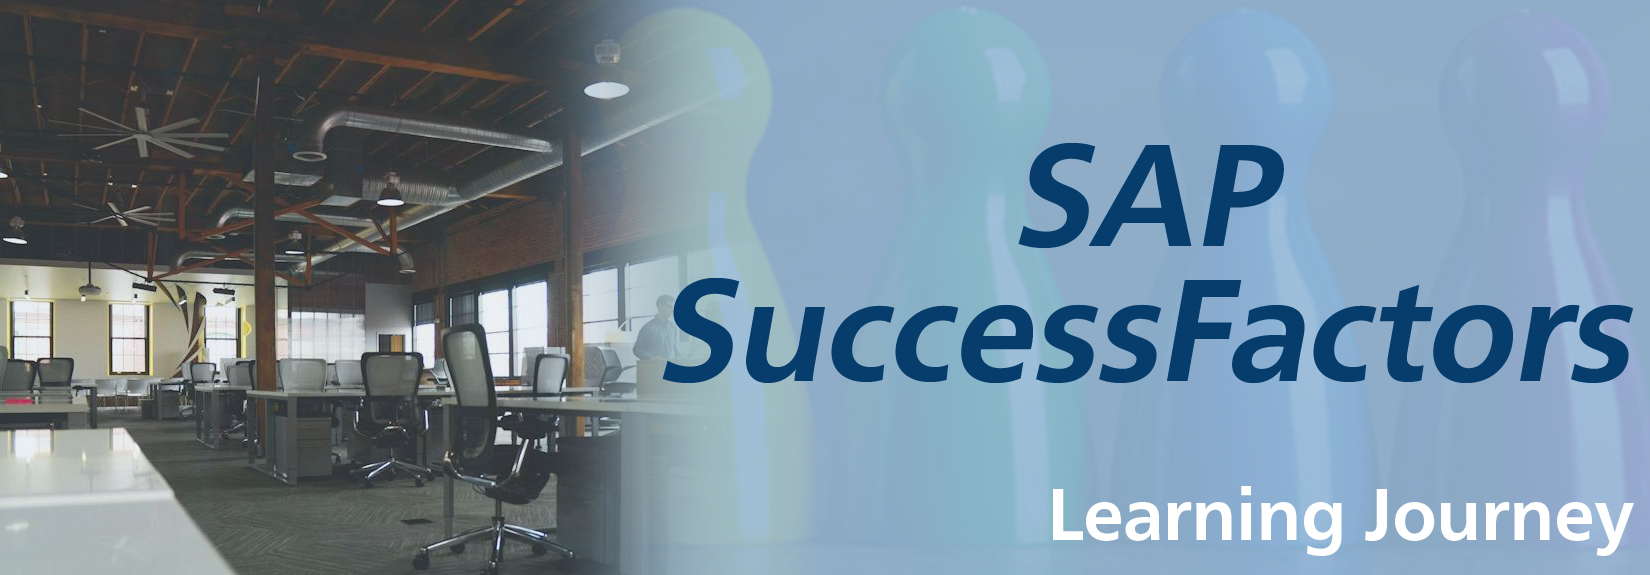 SAP SuccessFactors Learning Journey